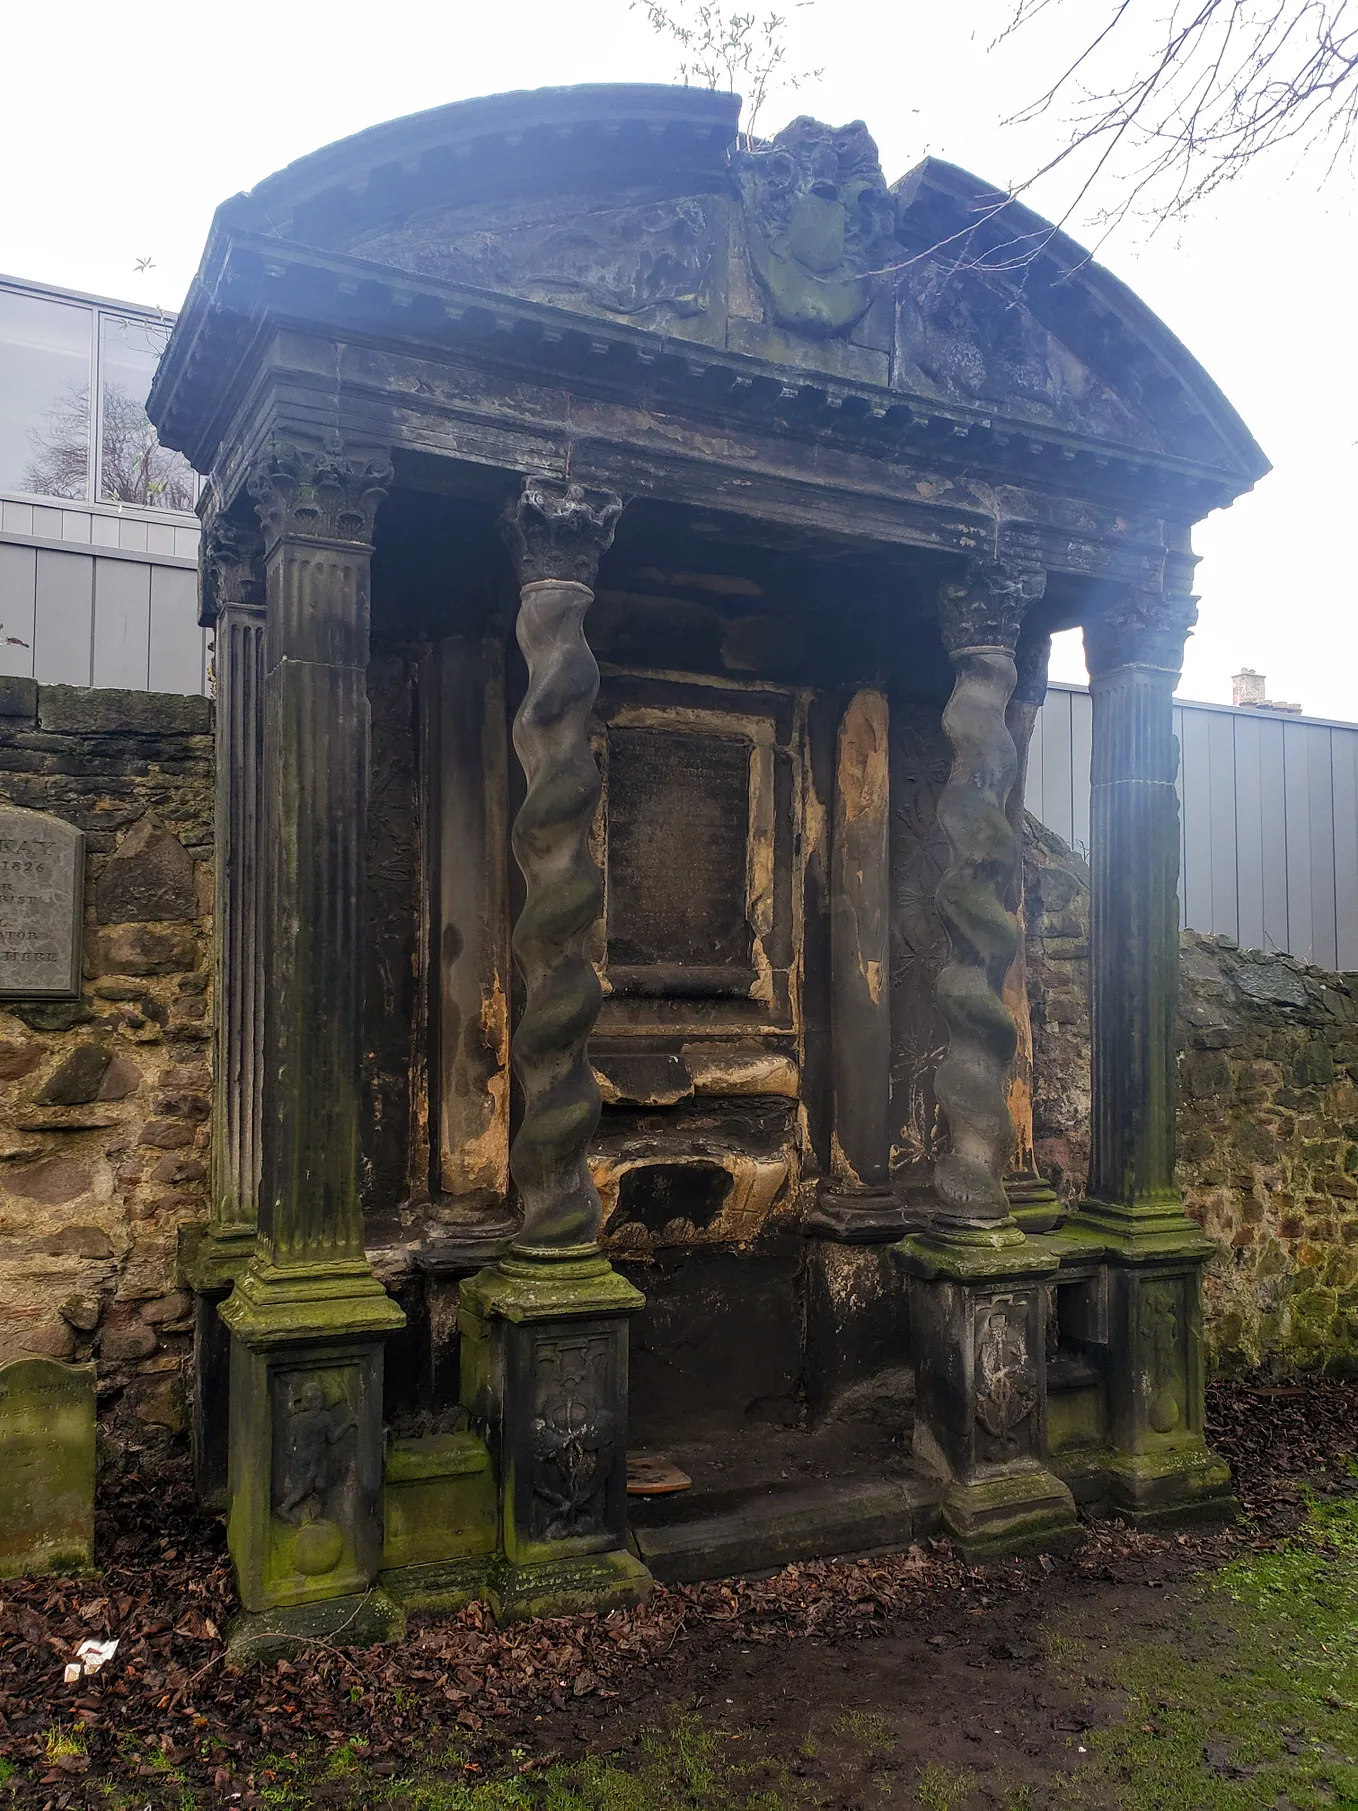 Finding Harry Potter In A Haunted Edinburgh Graveyard